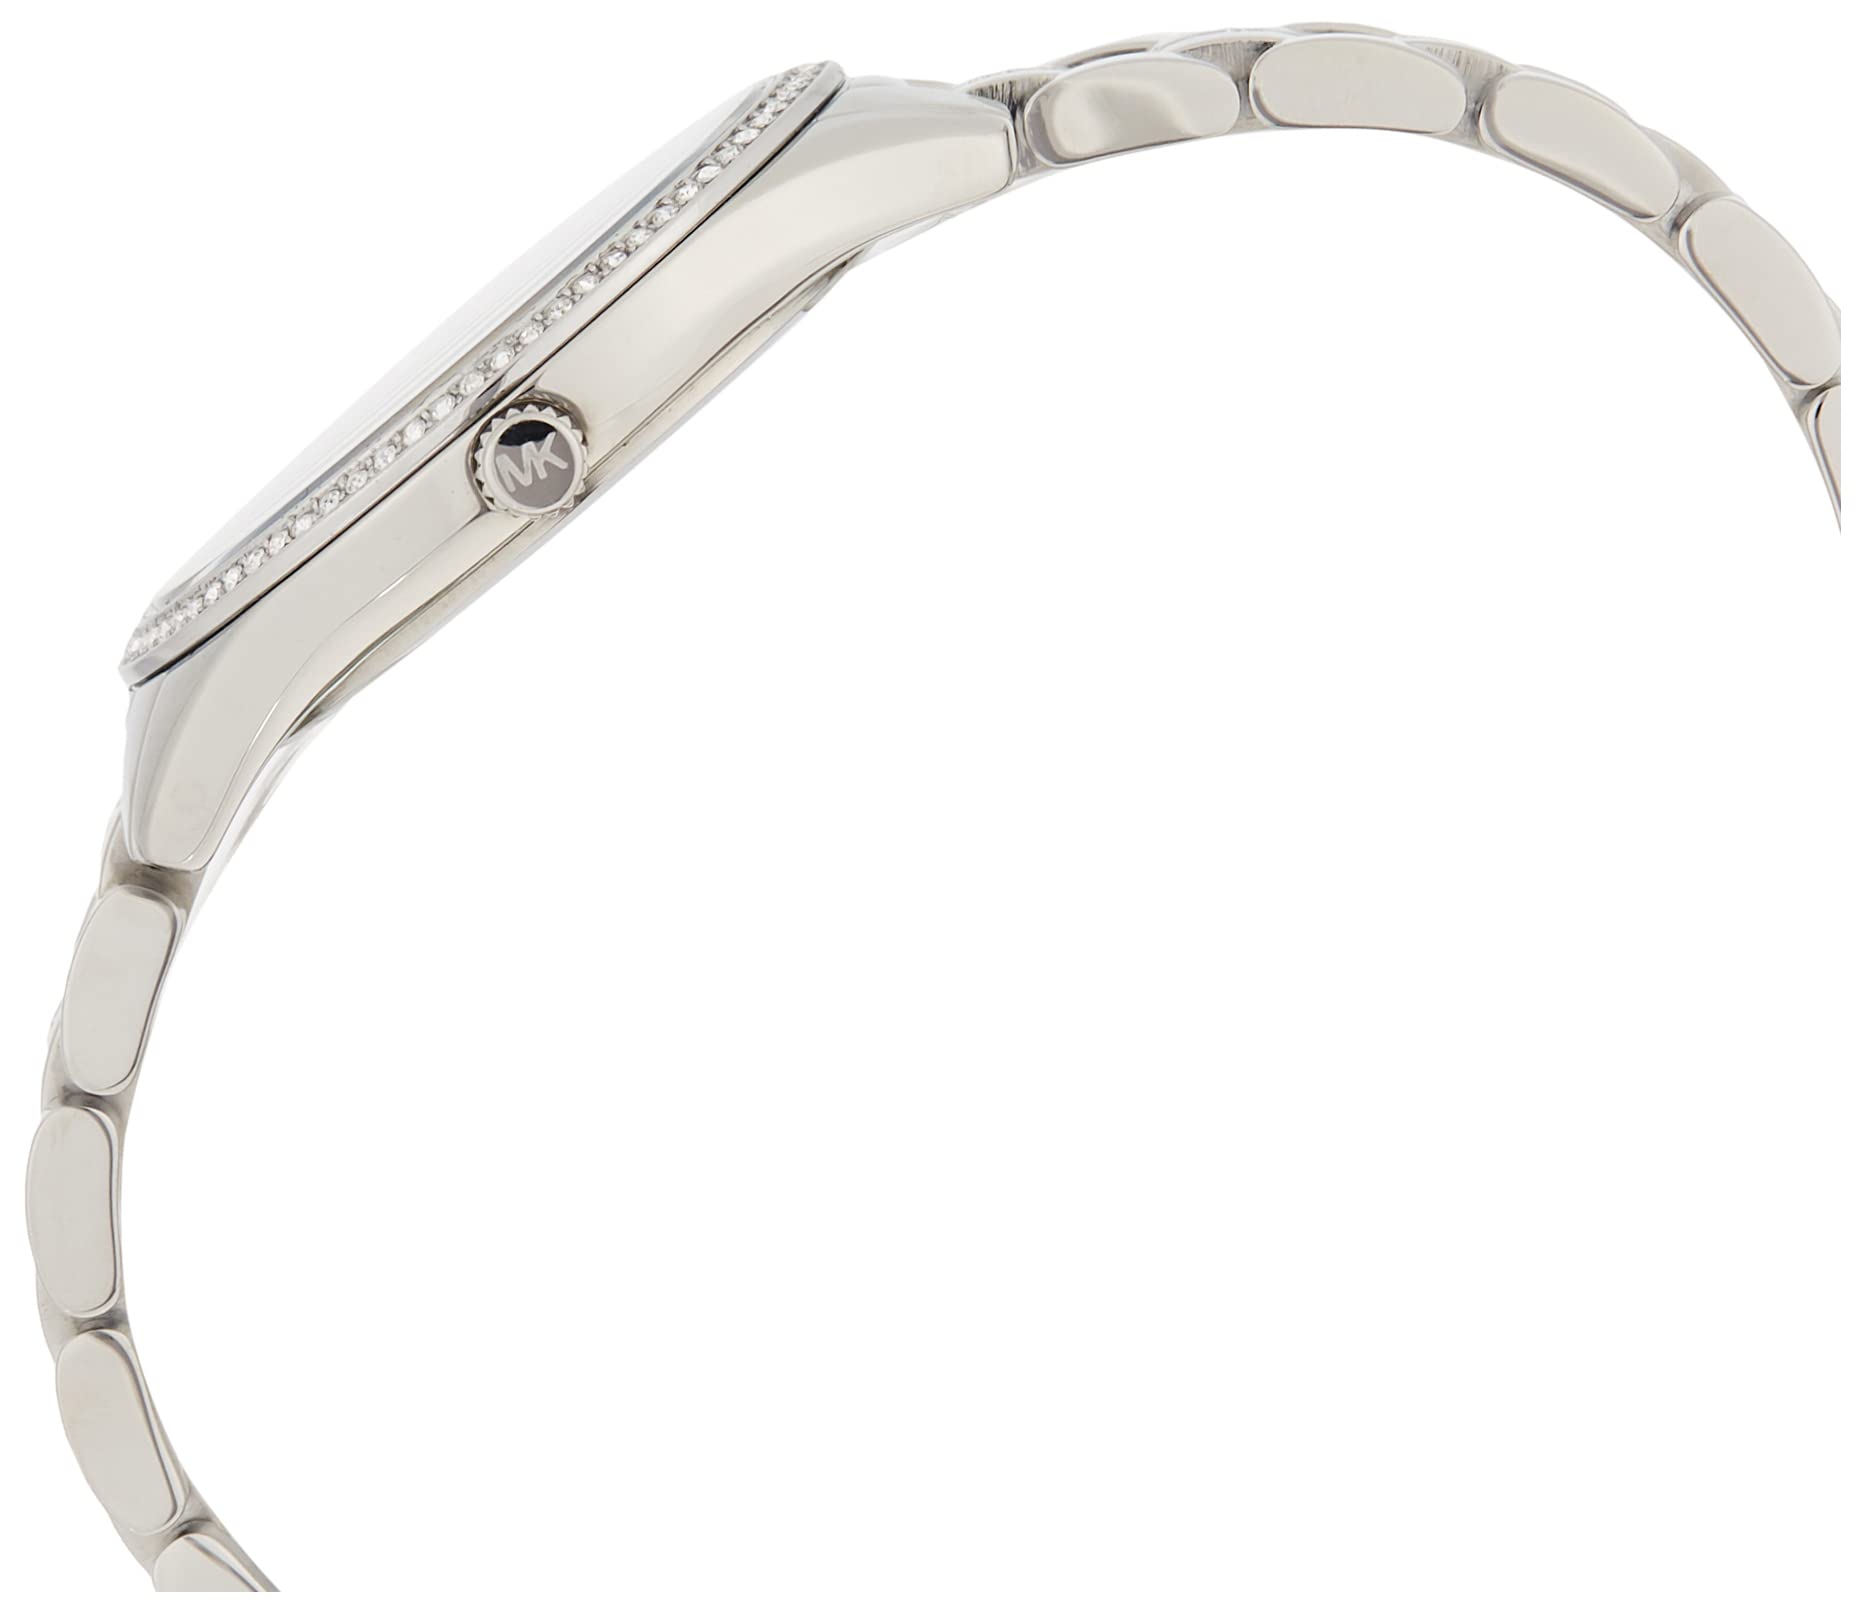 Michael Kors Women's Lauryn Stainless Steel Quartz Stainless-Steel Strap, Silver, 16 Casual Watch (Model: MK3900)